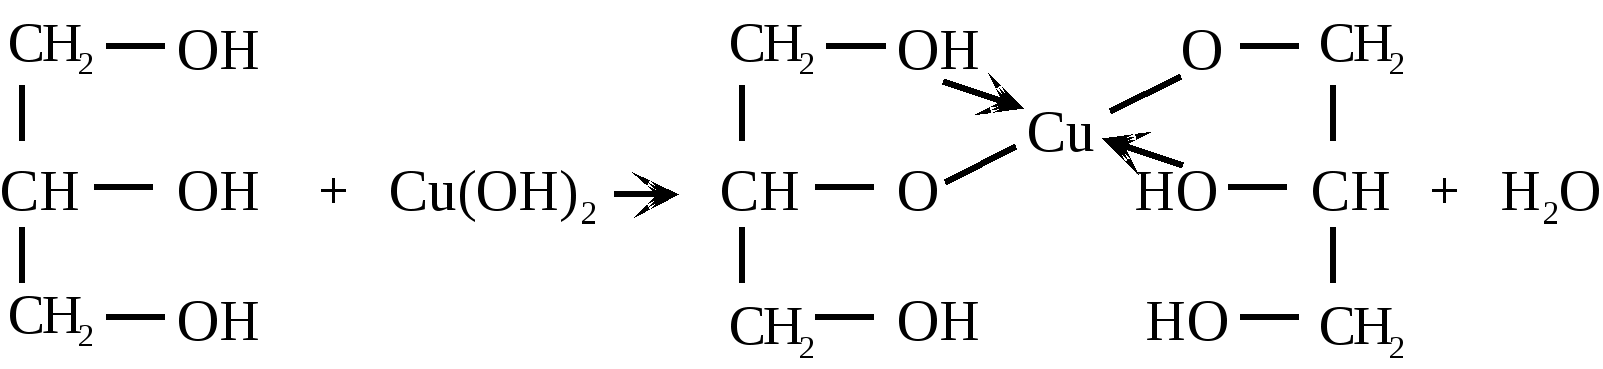 Пропанол 2 cu Oh 2. Глицерин + пропанол-1 + 2 пропанол-2 реакция. Пропанол 12 cu Oh 2. Глицерин реагирует с гидроксидом меди 2